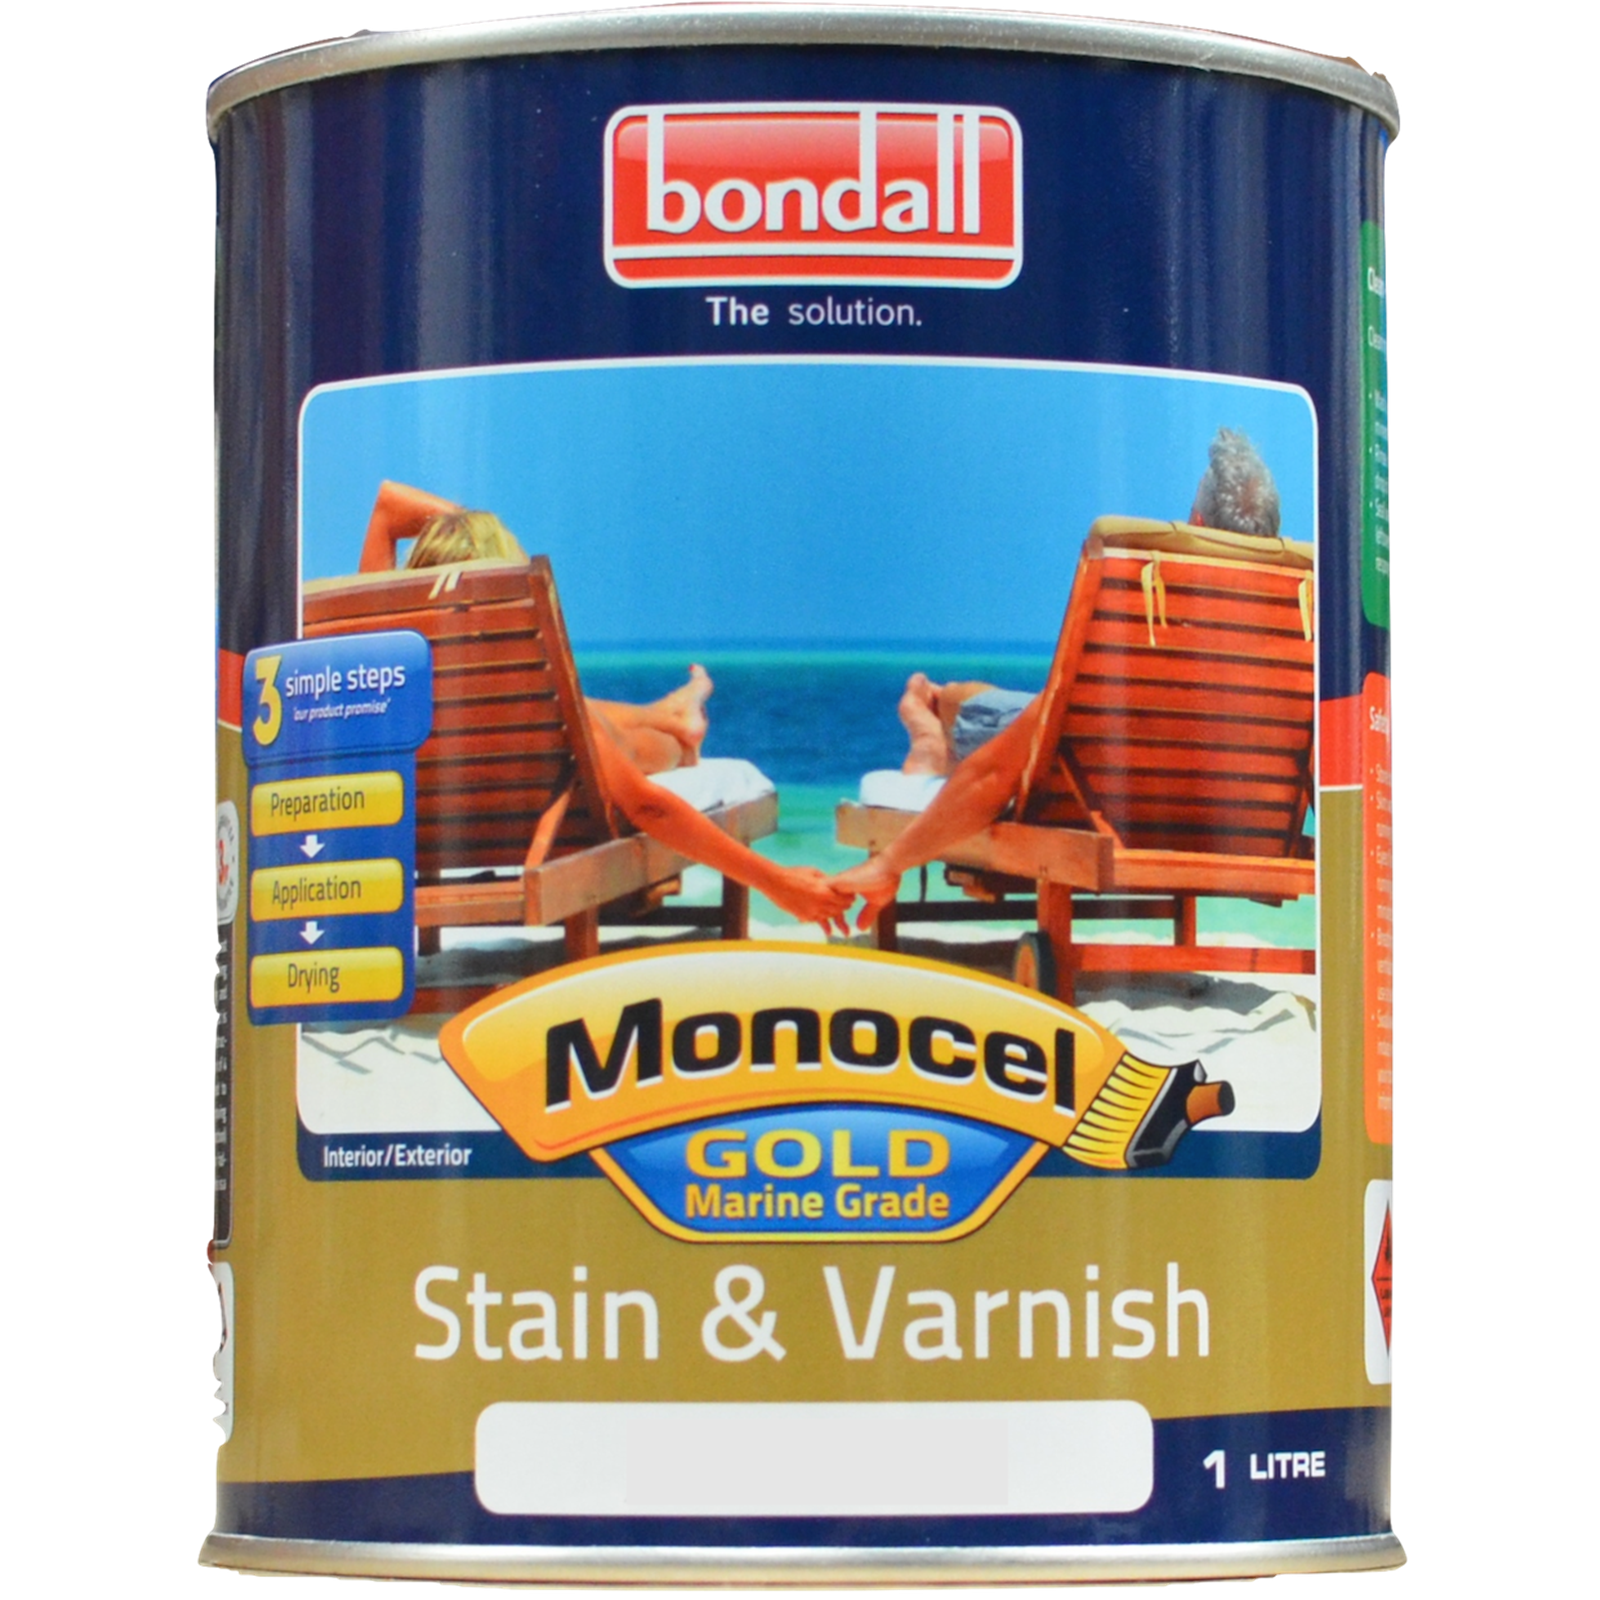 Bondall 500ml Cedar Monocel Gold Marine Grade Stain And Varnish